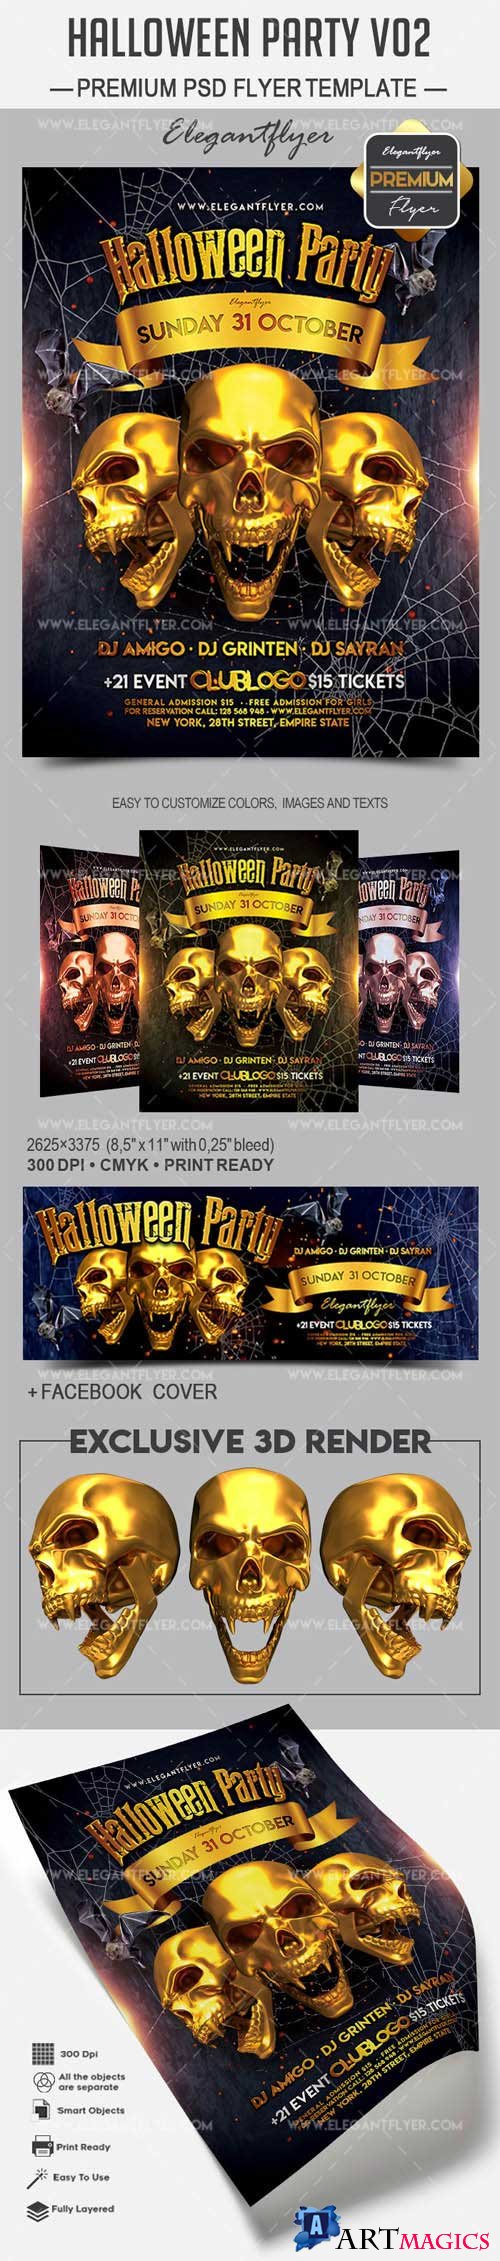 Halloween Party Flyer PSD Template vol 4